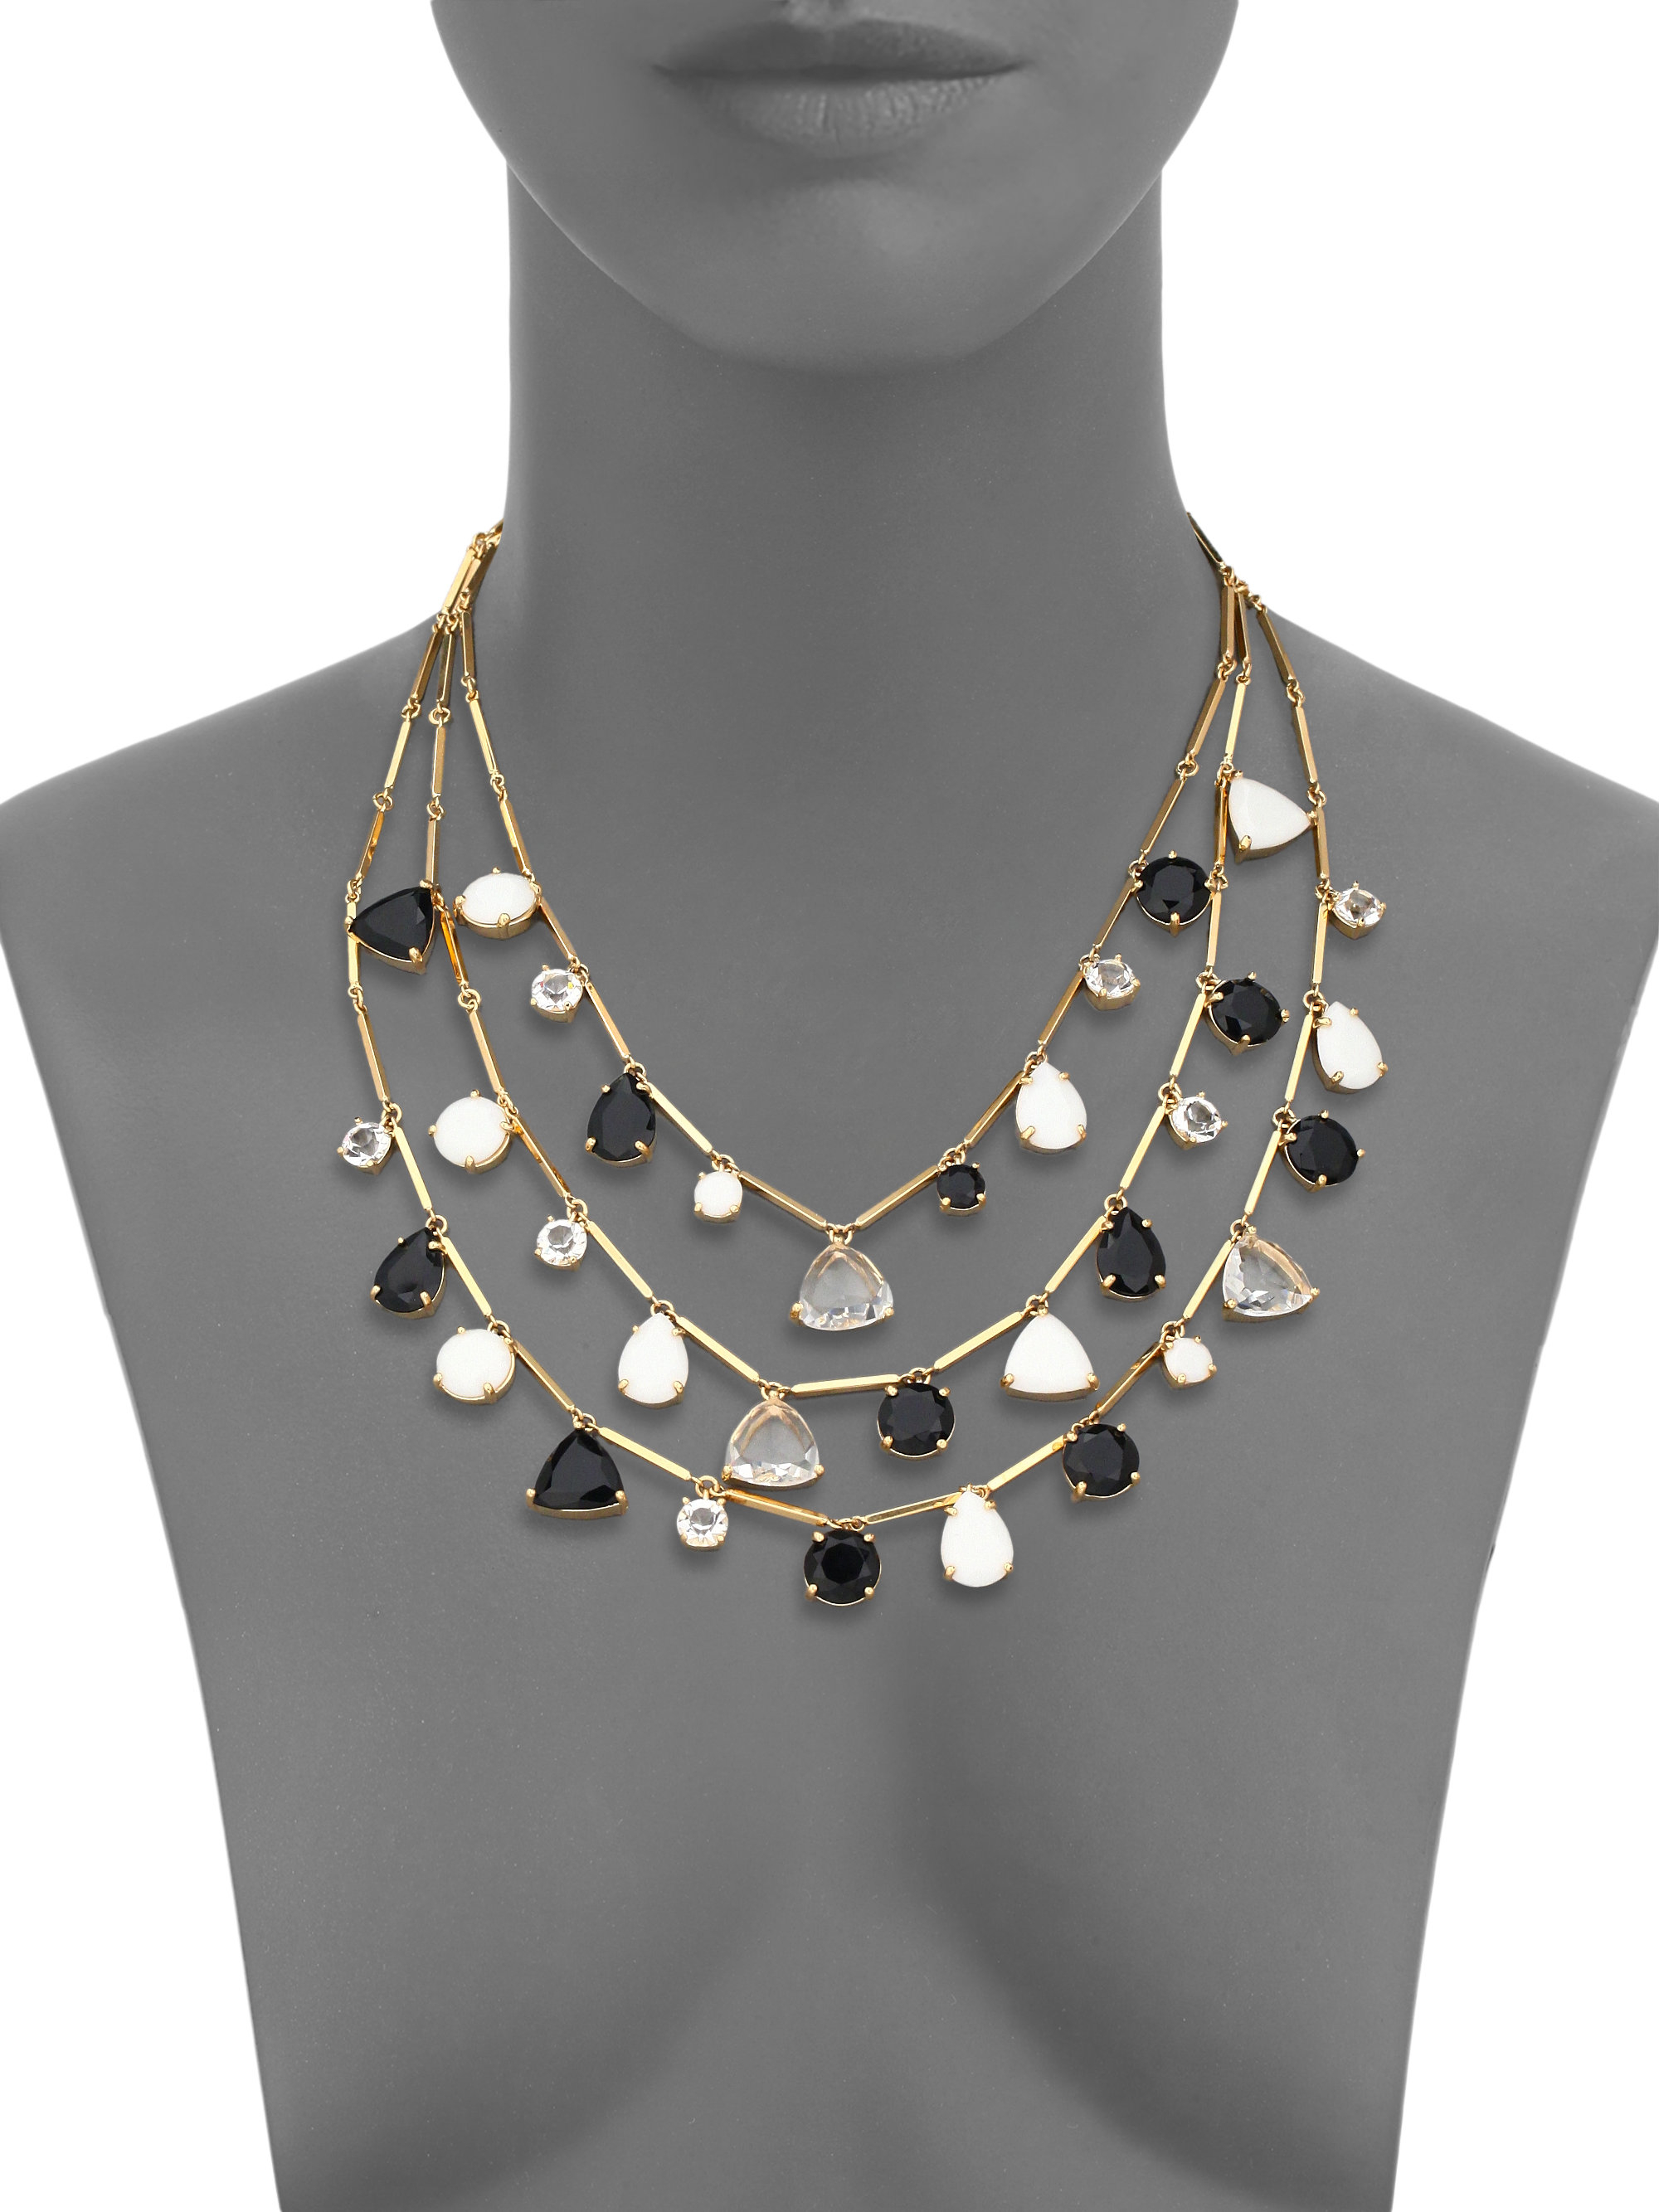 Lyst - Kate Spade New York Twinkle Lights Multi-strand Necklace in Metallic